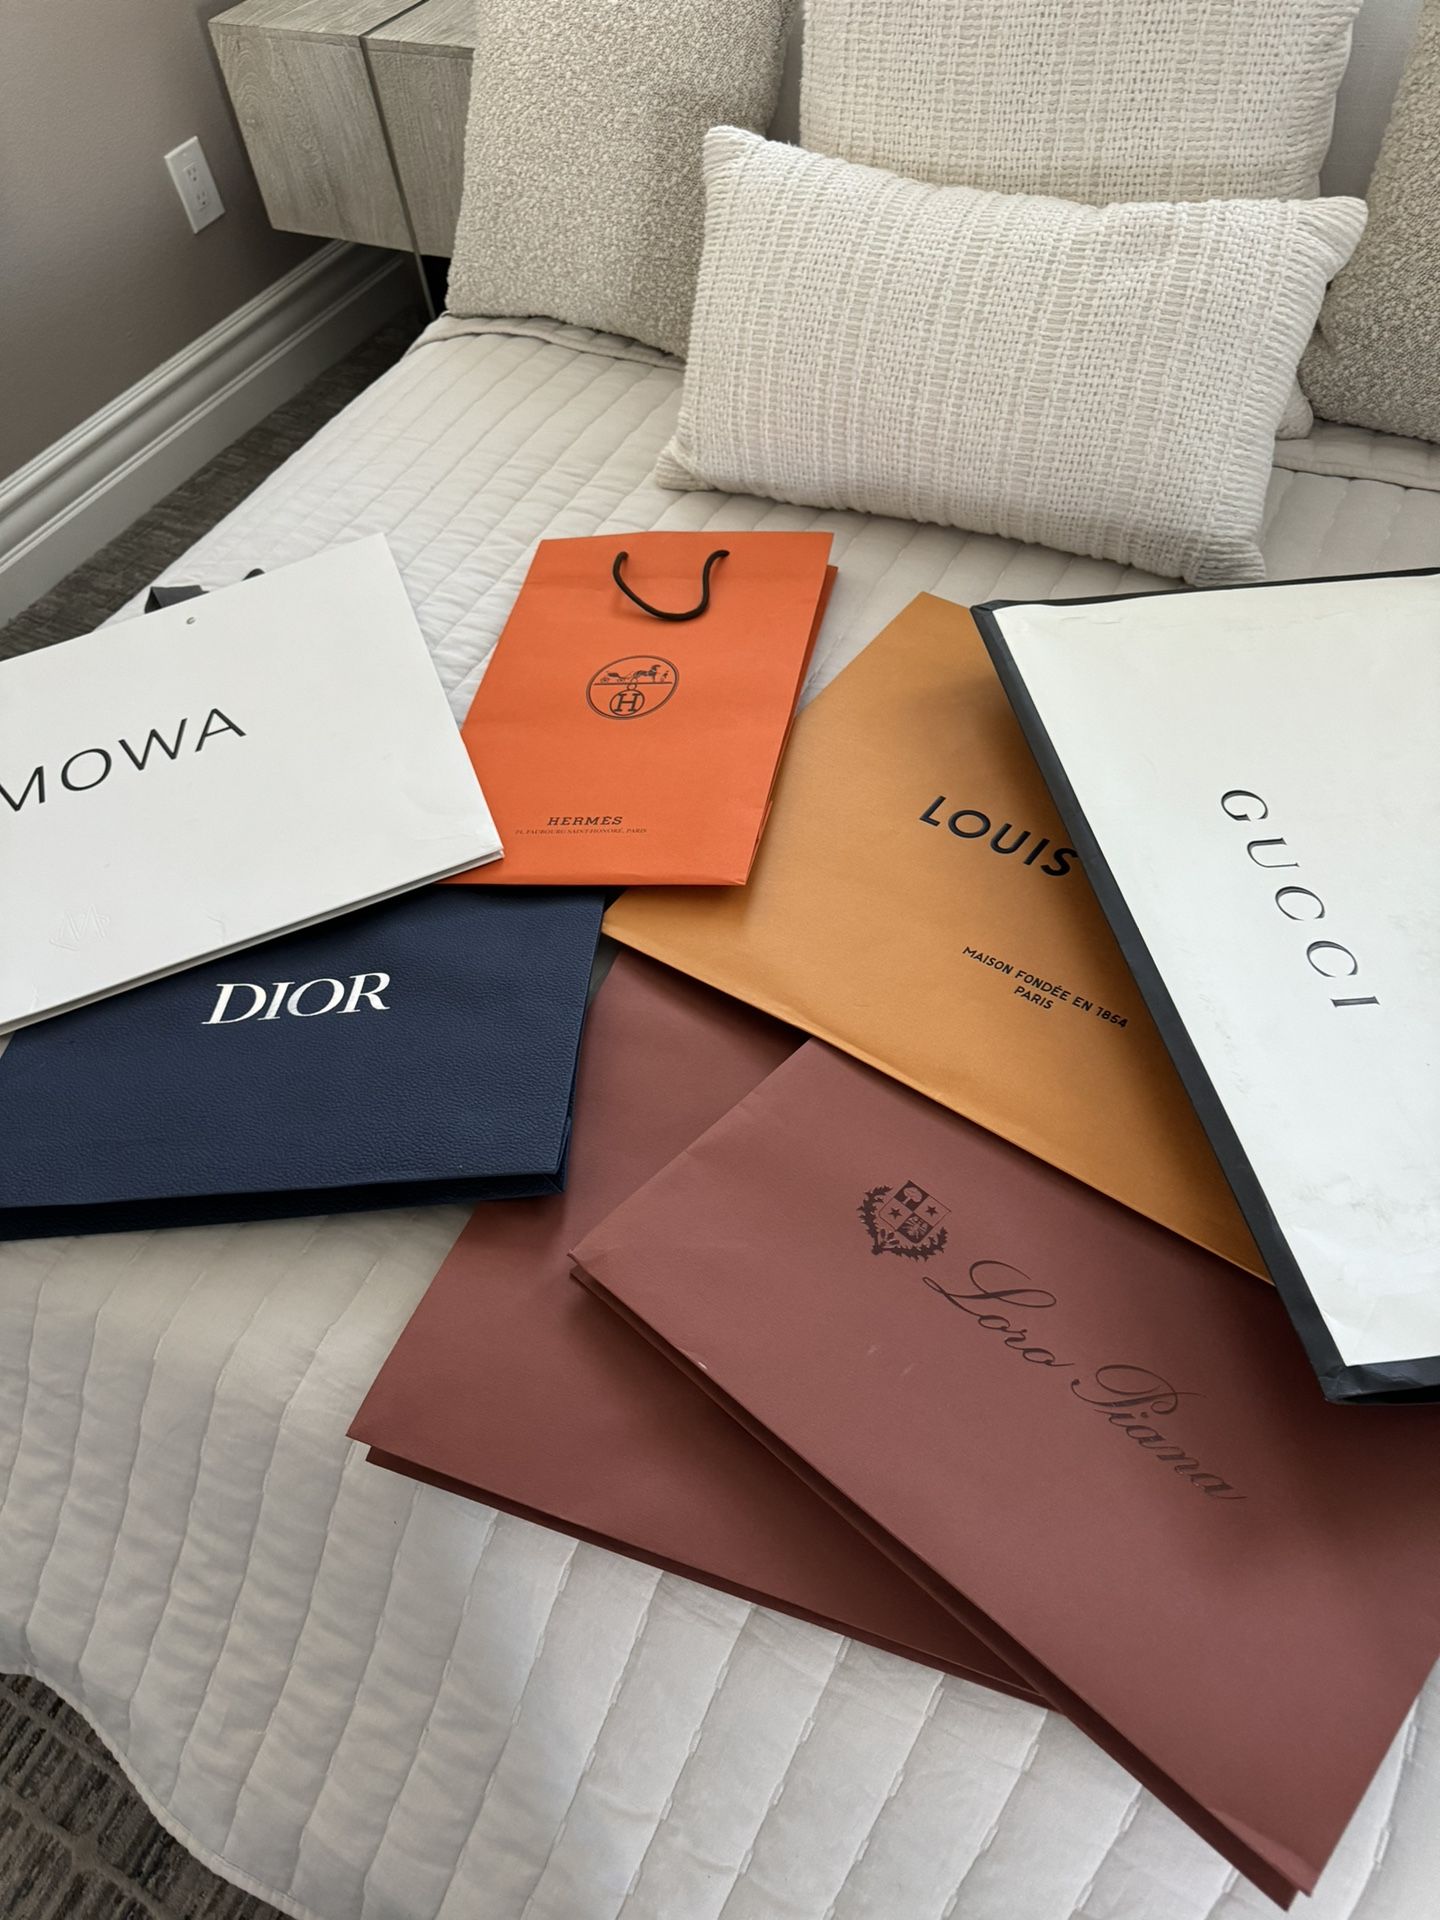 Gucci, Loro Piana, Dior, Louis Vuitton, Rimowa shopping bags